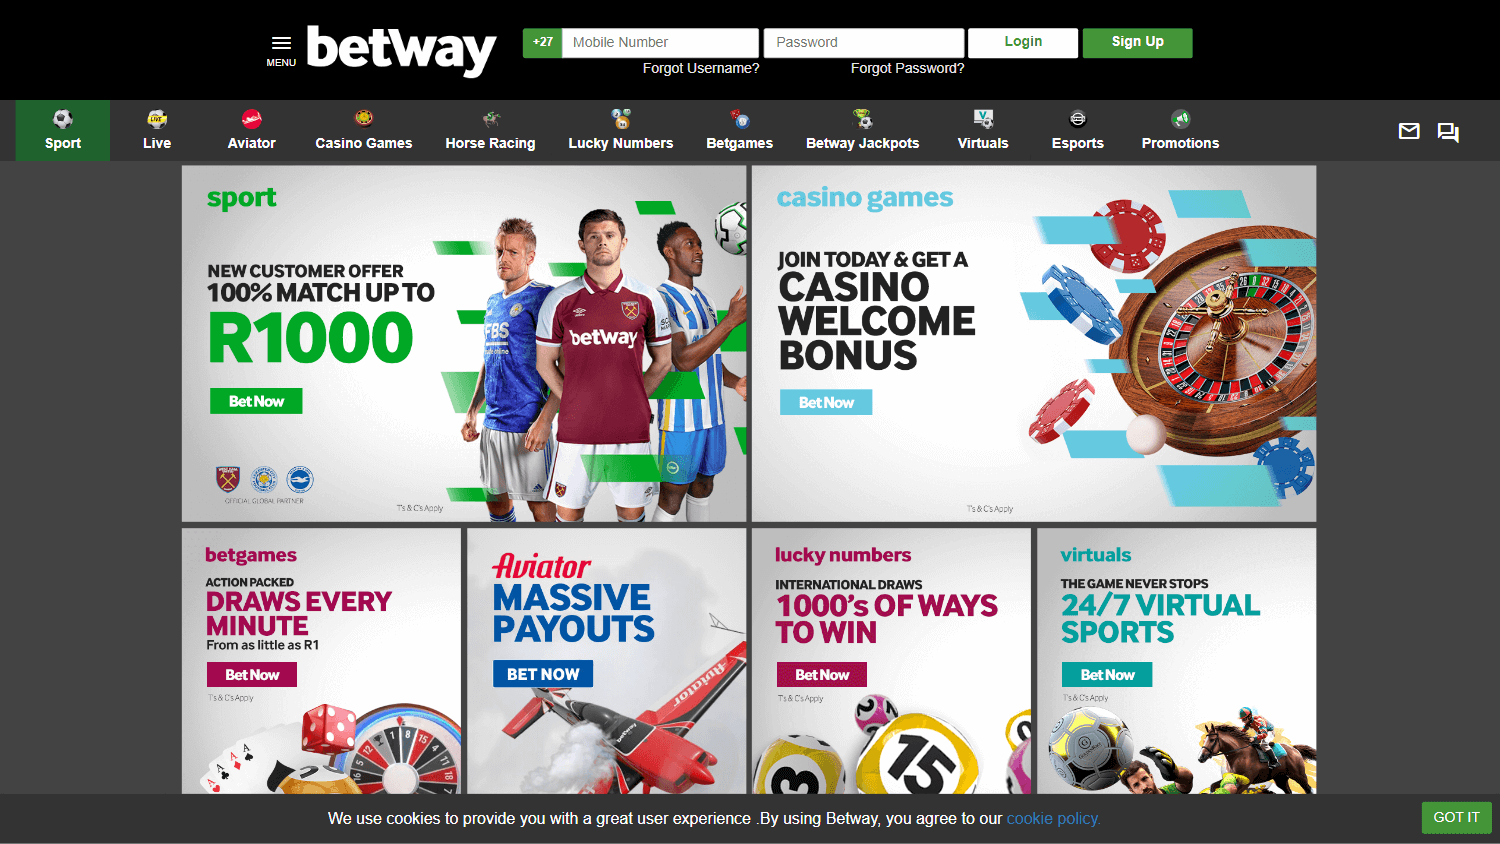 betway_casino_za_homepage_desktop